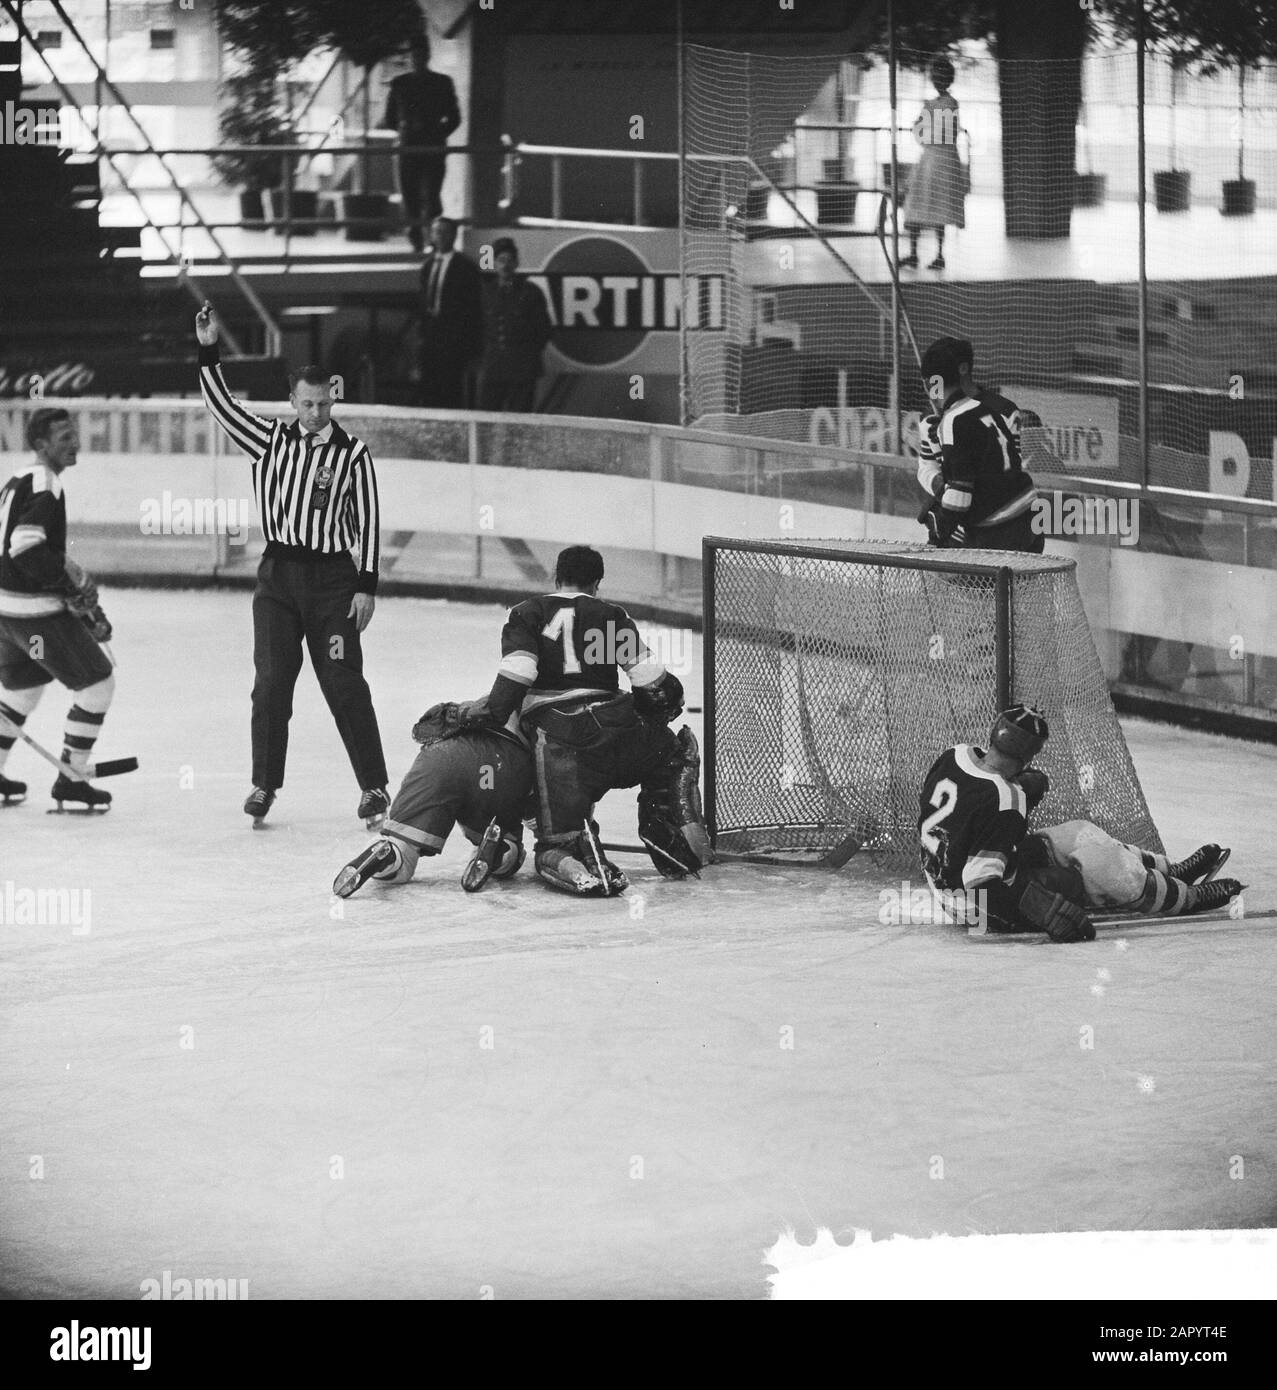 World ice hockey championships hi-res stock photography and images image